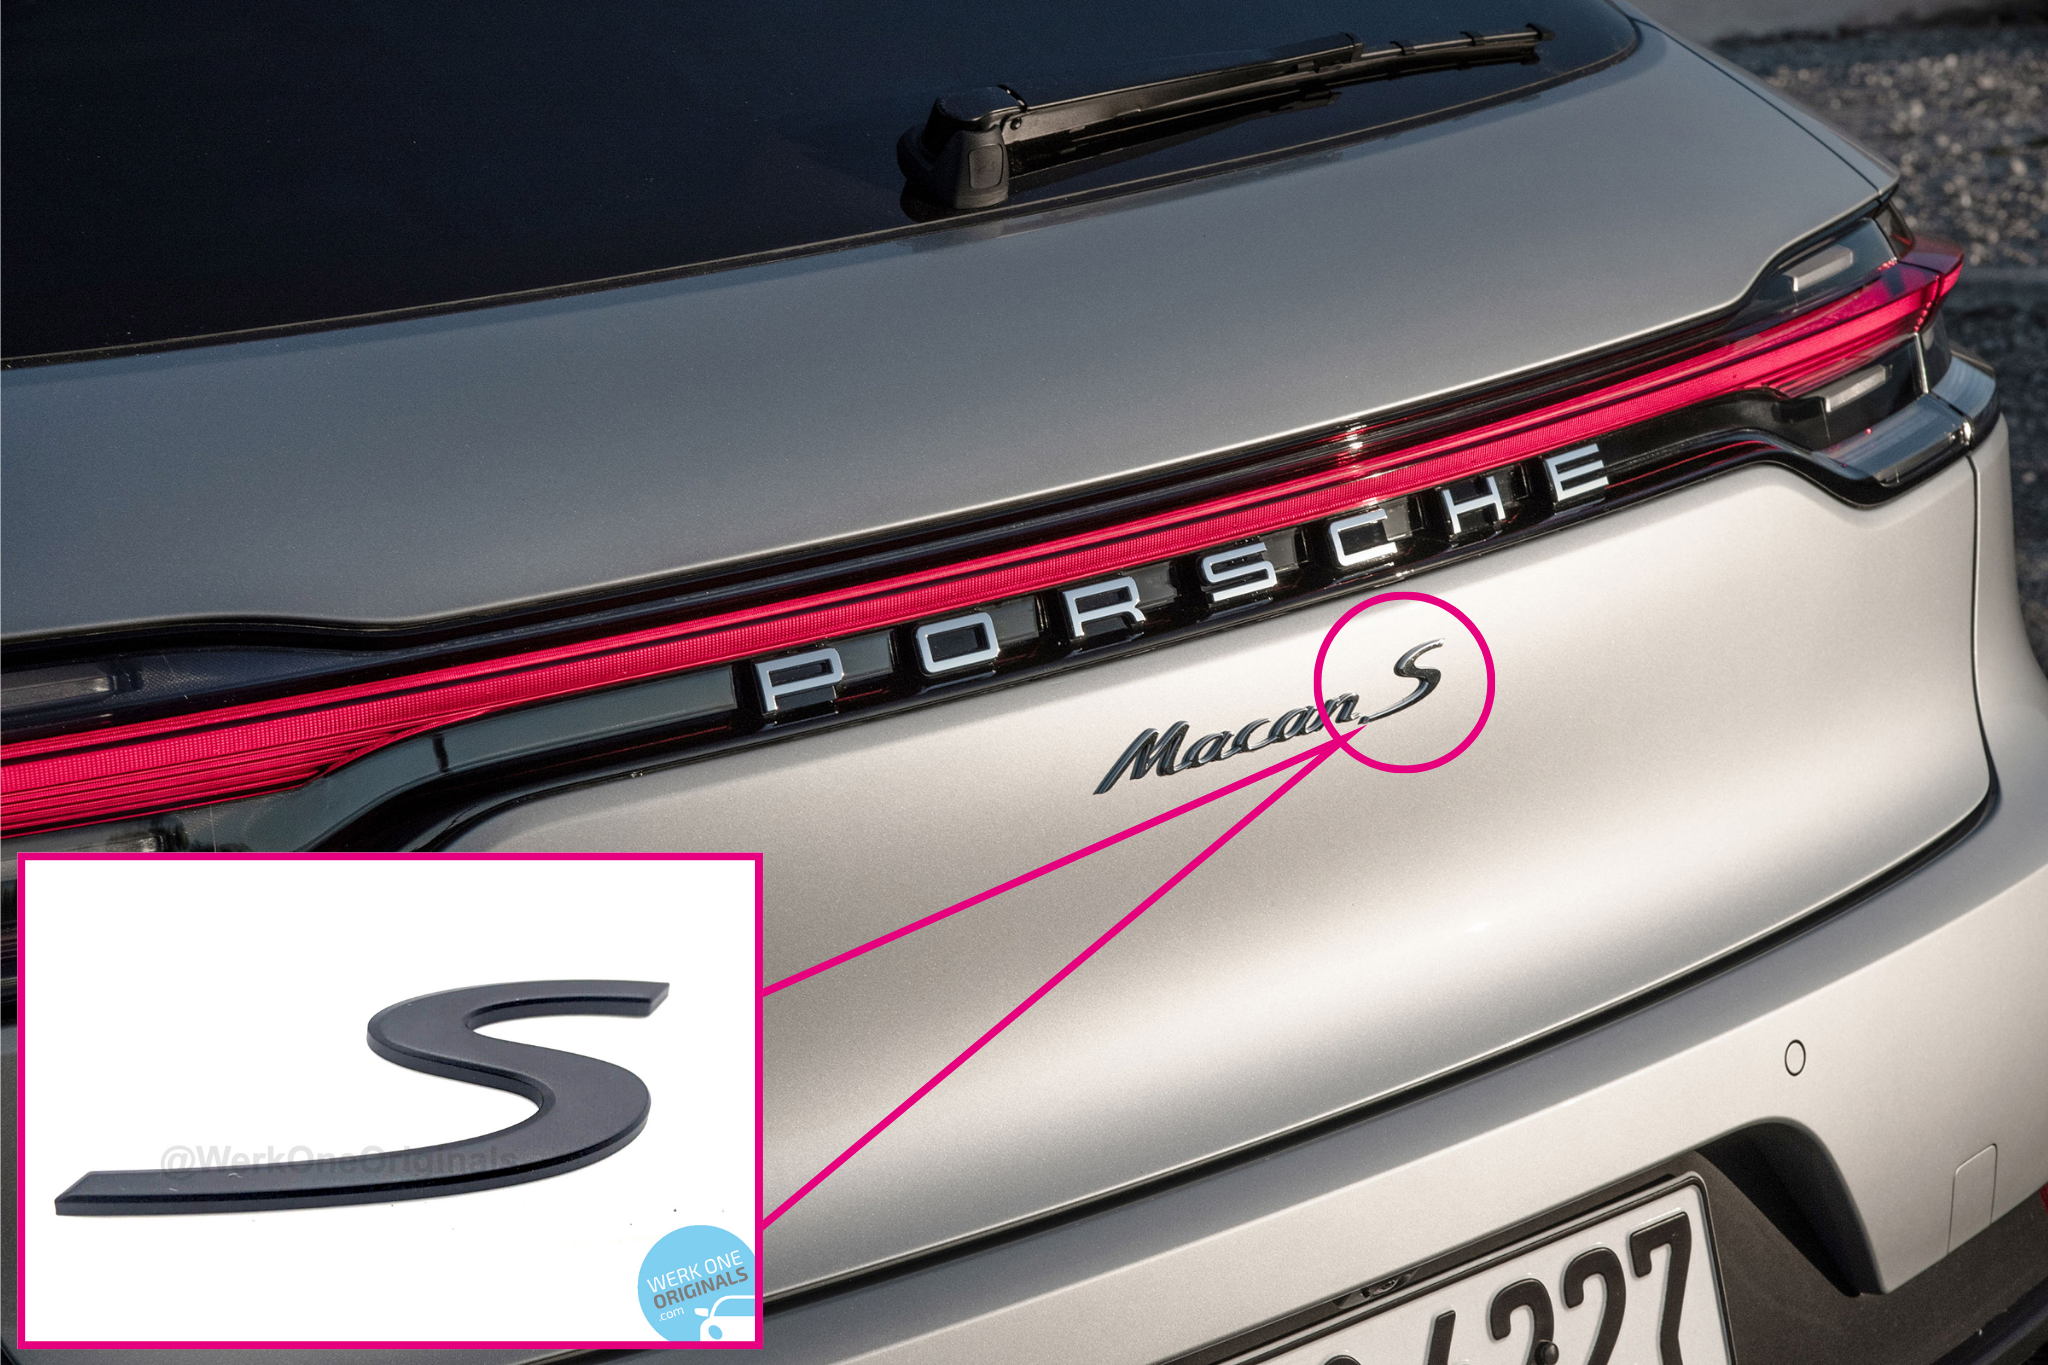 Porsche Official 'S' Rear Badge in Matte Black for Macan S Type 95B Models